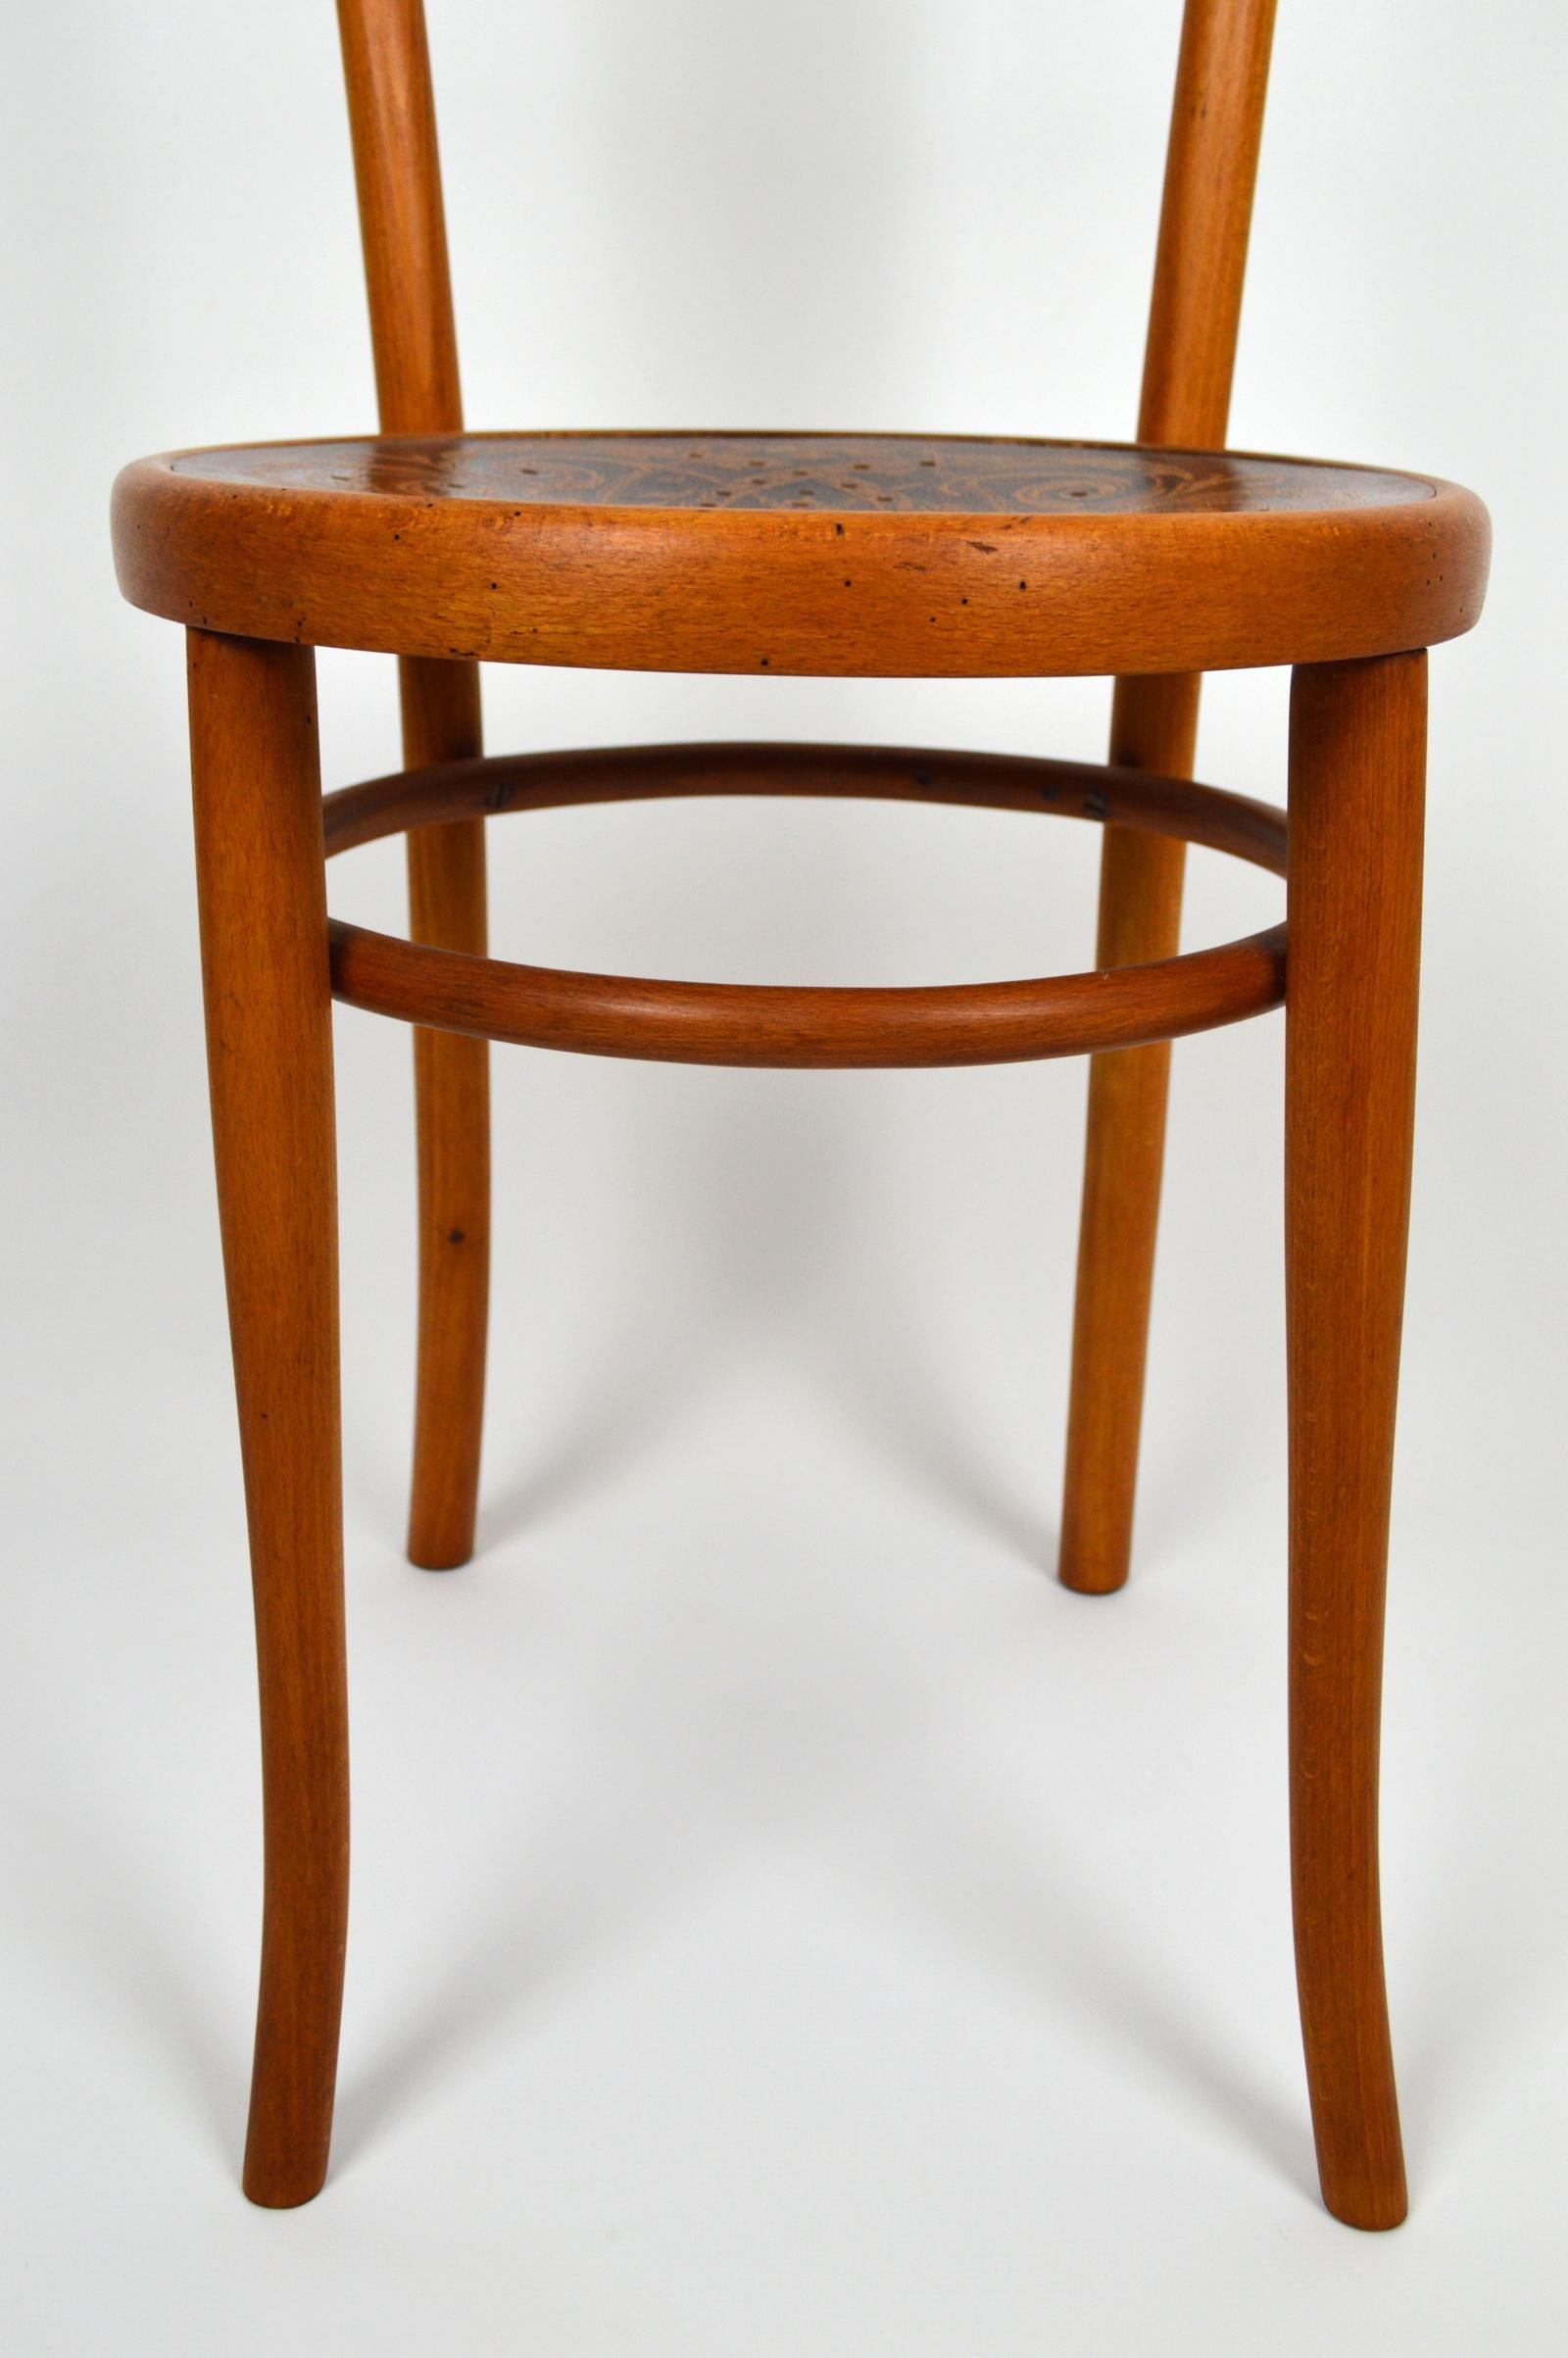 Austrian Art Nouveau Bentwood Chair with Patterned Seat, J. & J. Kohn, 1900s For Sale 2